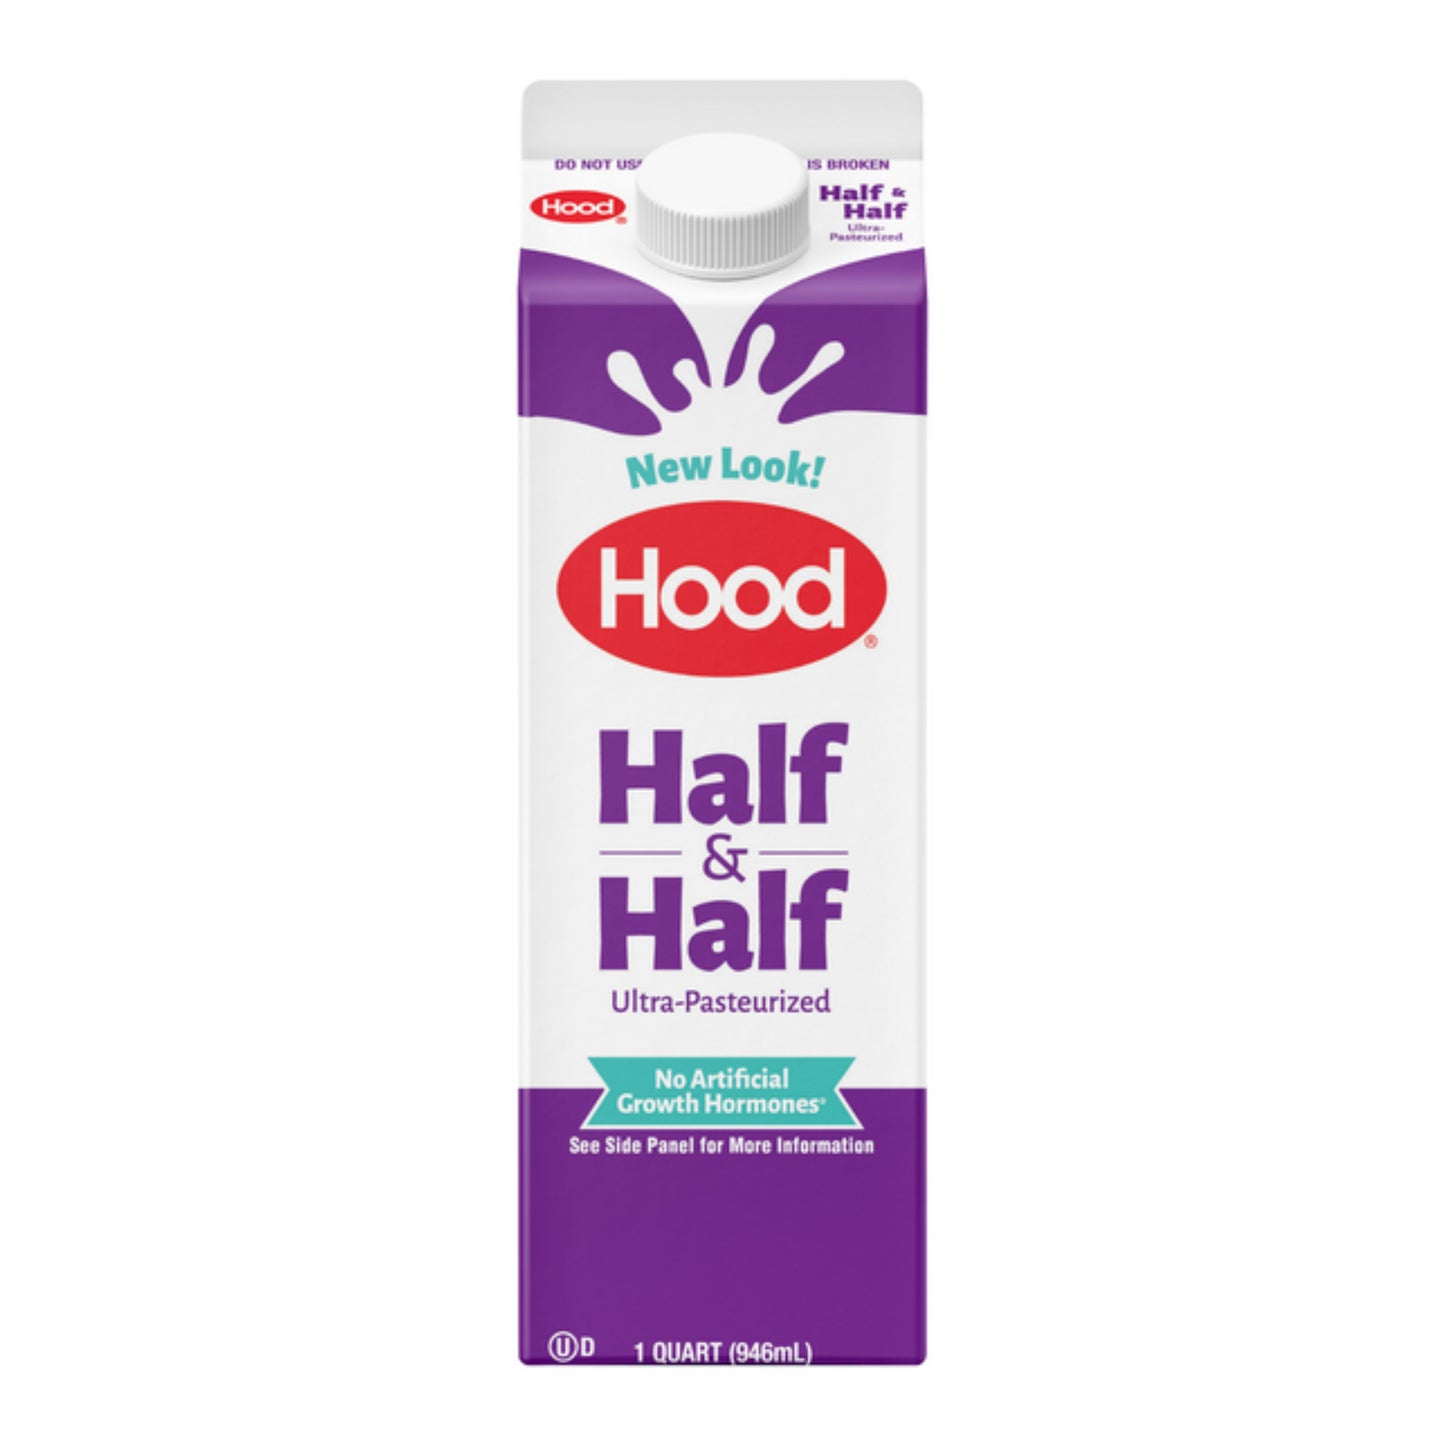 Hood Half + Half